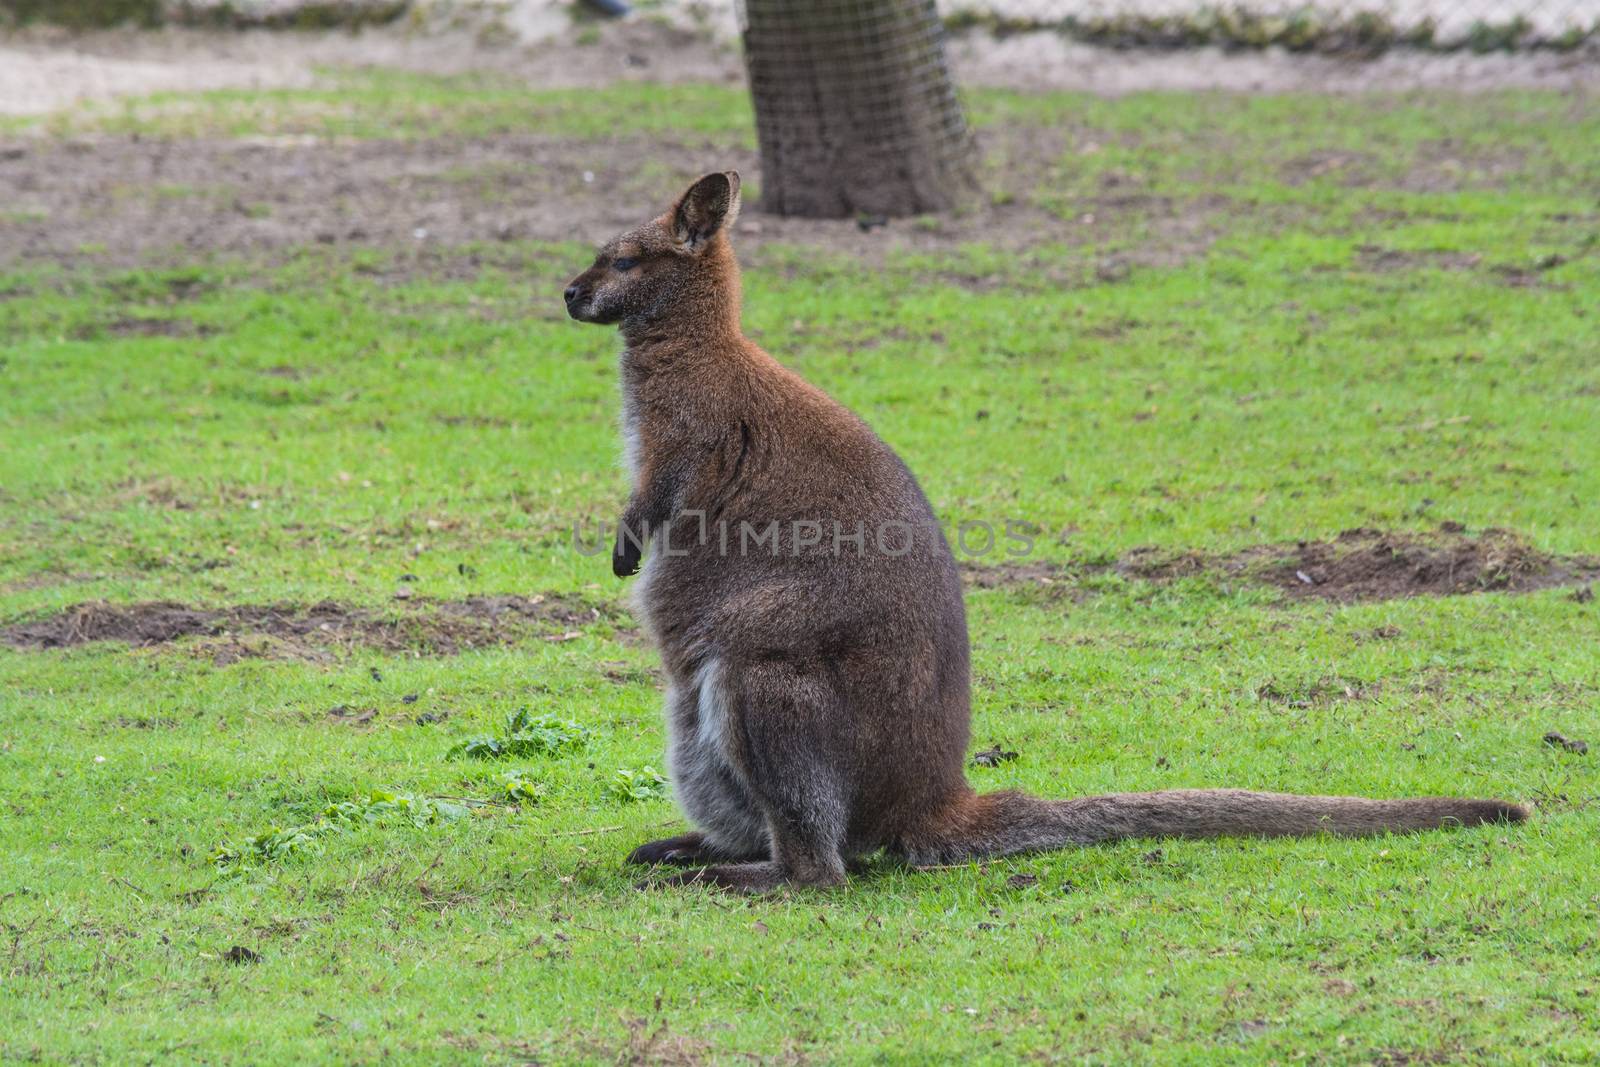 Kangaroo in its natural habitat by JFsPic